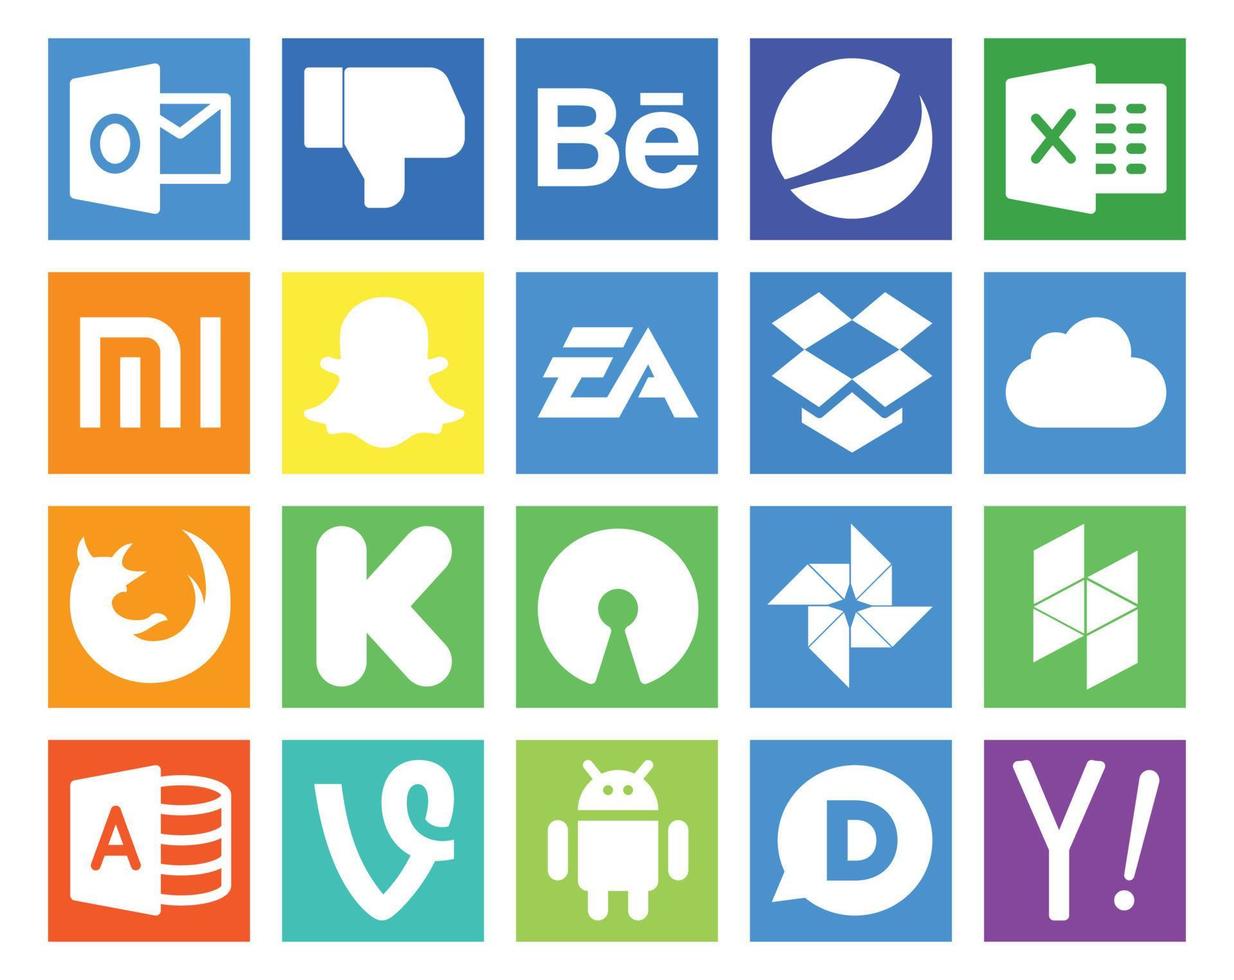 Paquete de 20 íconos de redes sociales que incluye houzz de código abierto ea kickstarter firefox vector